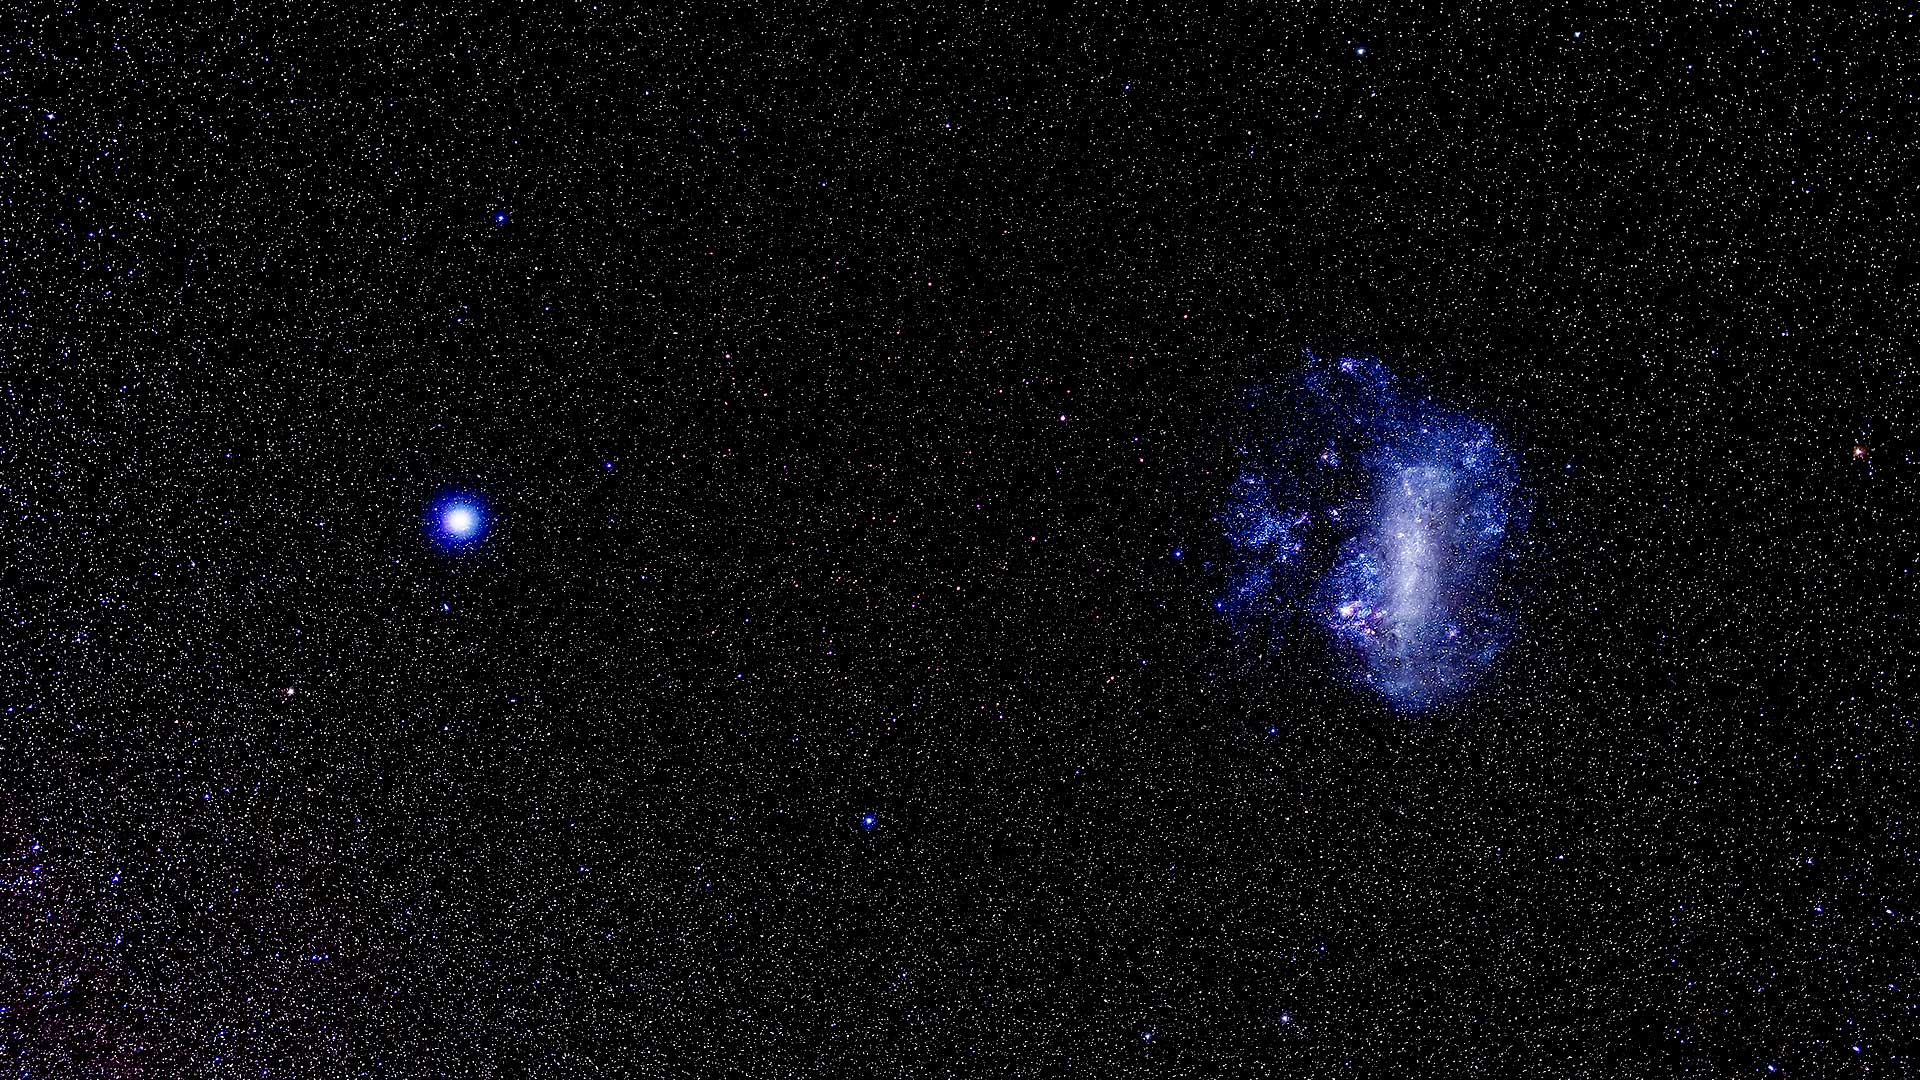 Canopus star photograph